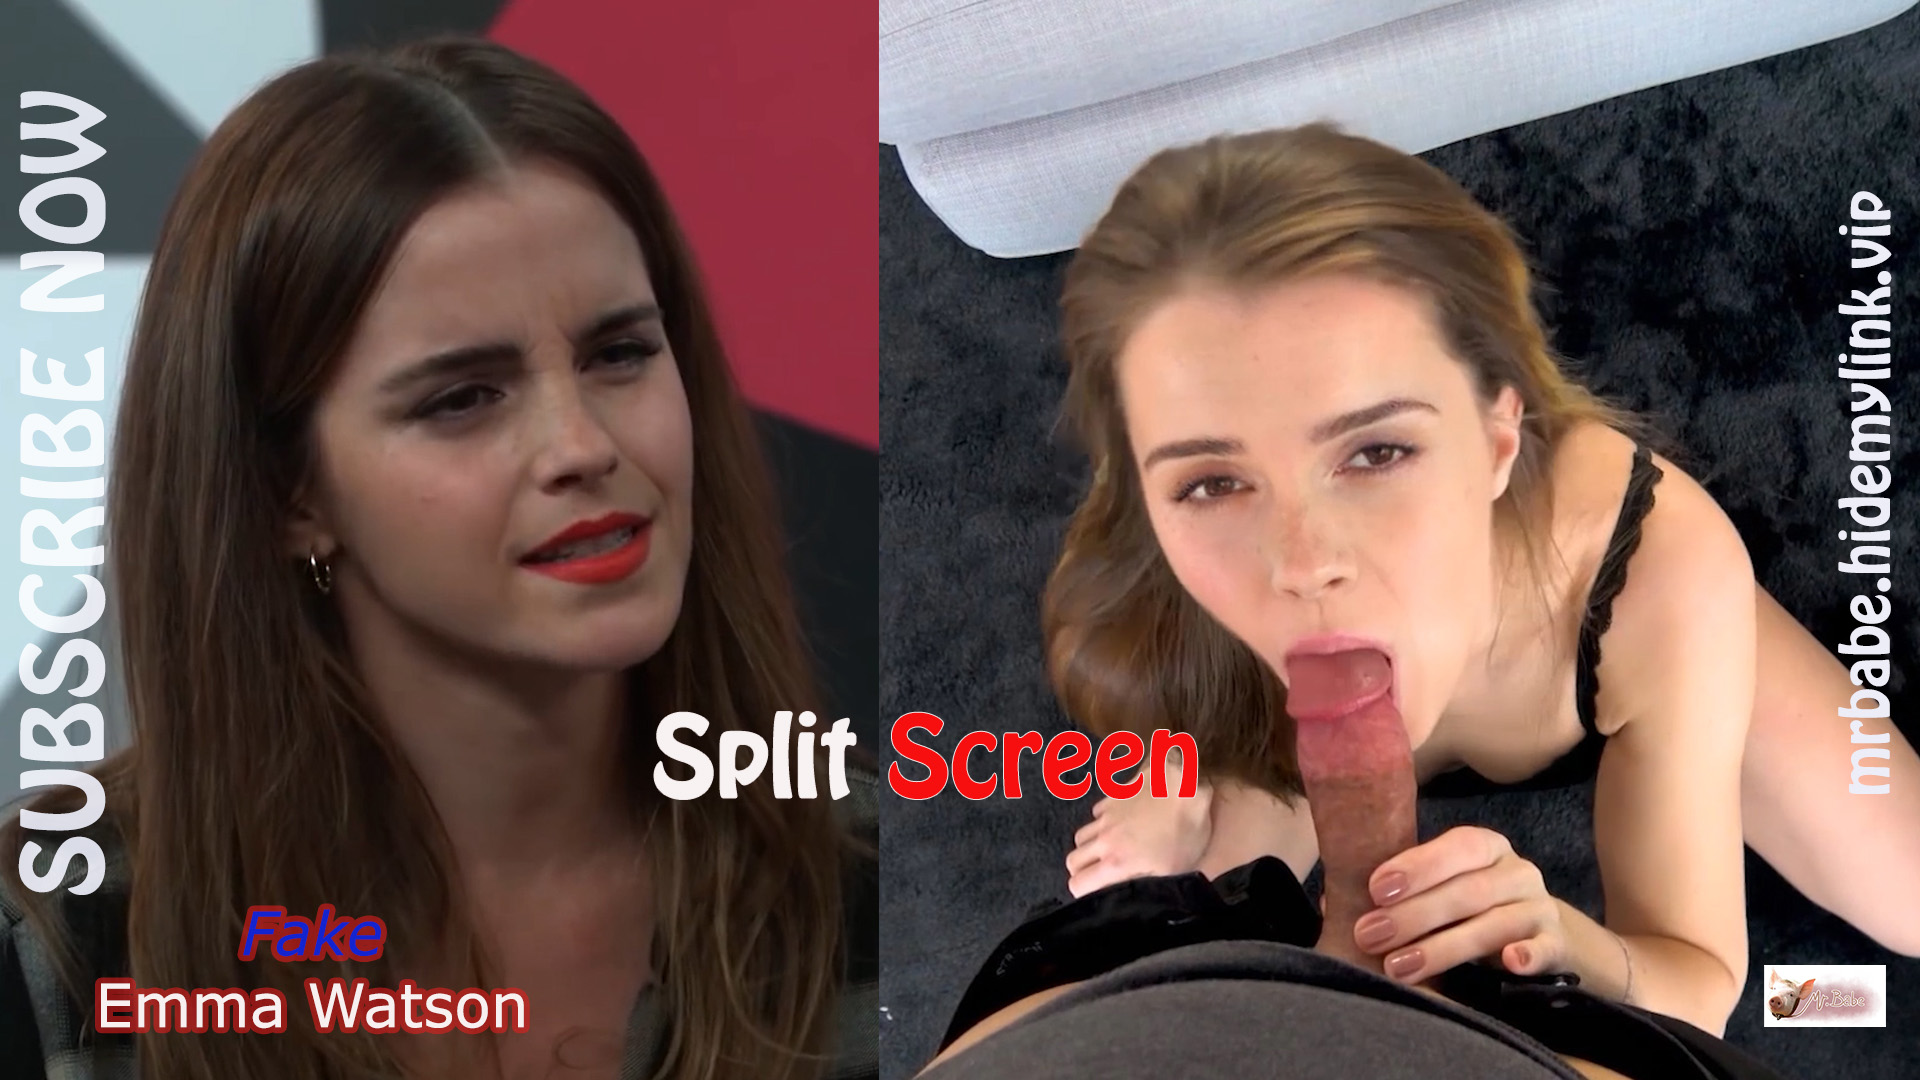 Fake Emma Watson (trailer) -16- / Split Screen / Free Download